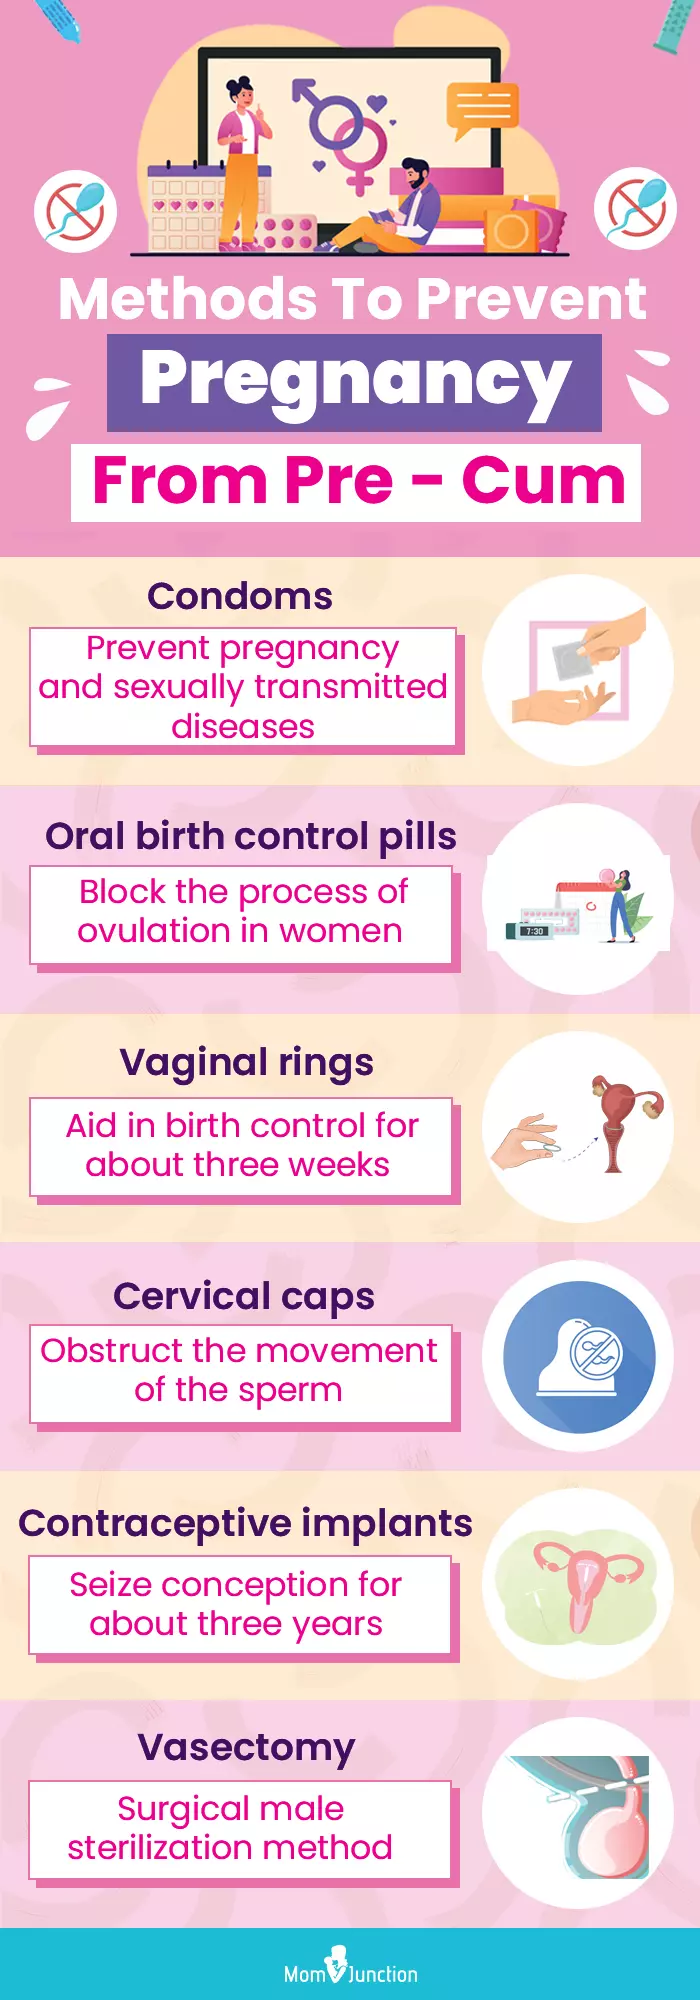 methods to prevent pregnancy from precum (infographic)